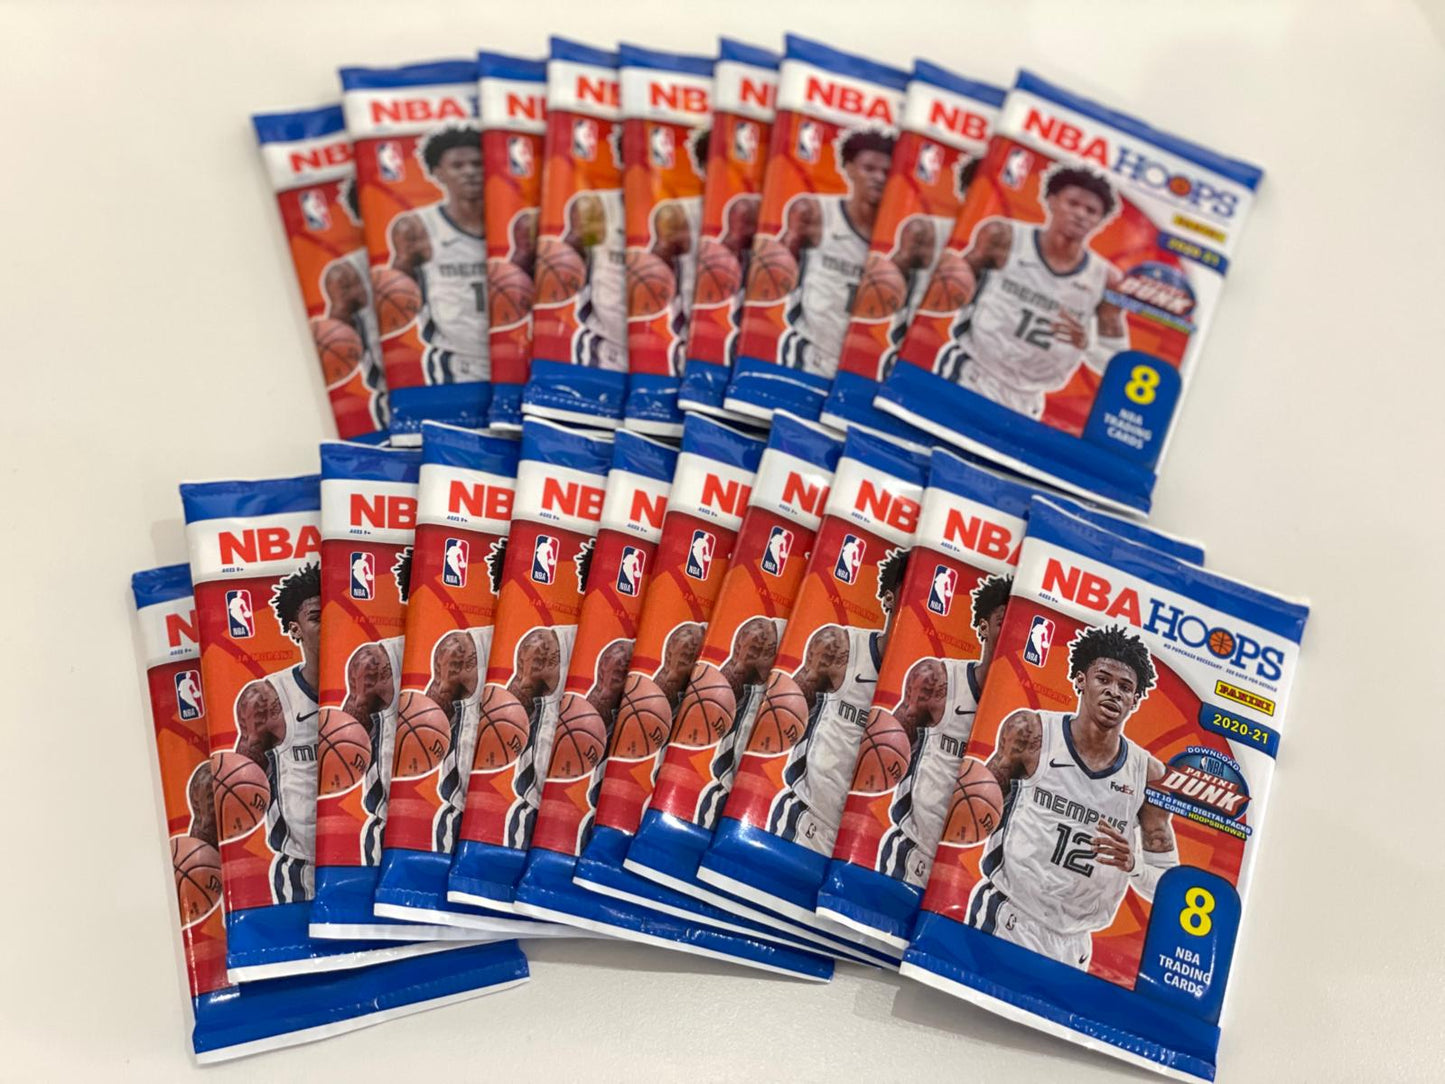 Panini 2020-21 NBA Hoops Basketball Card Pack (8cards)